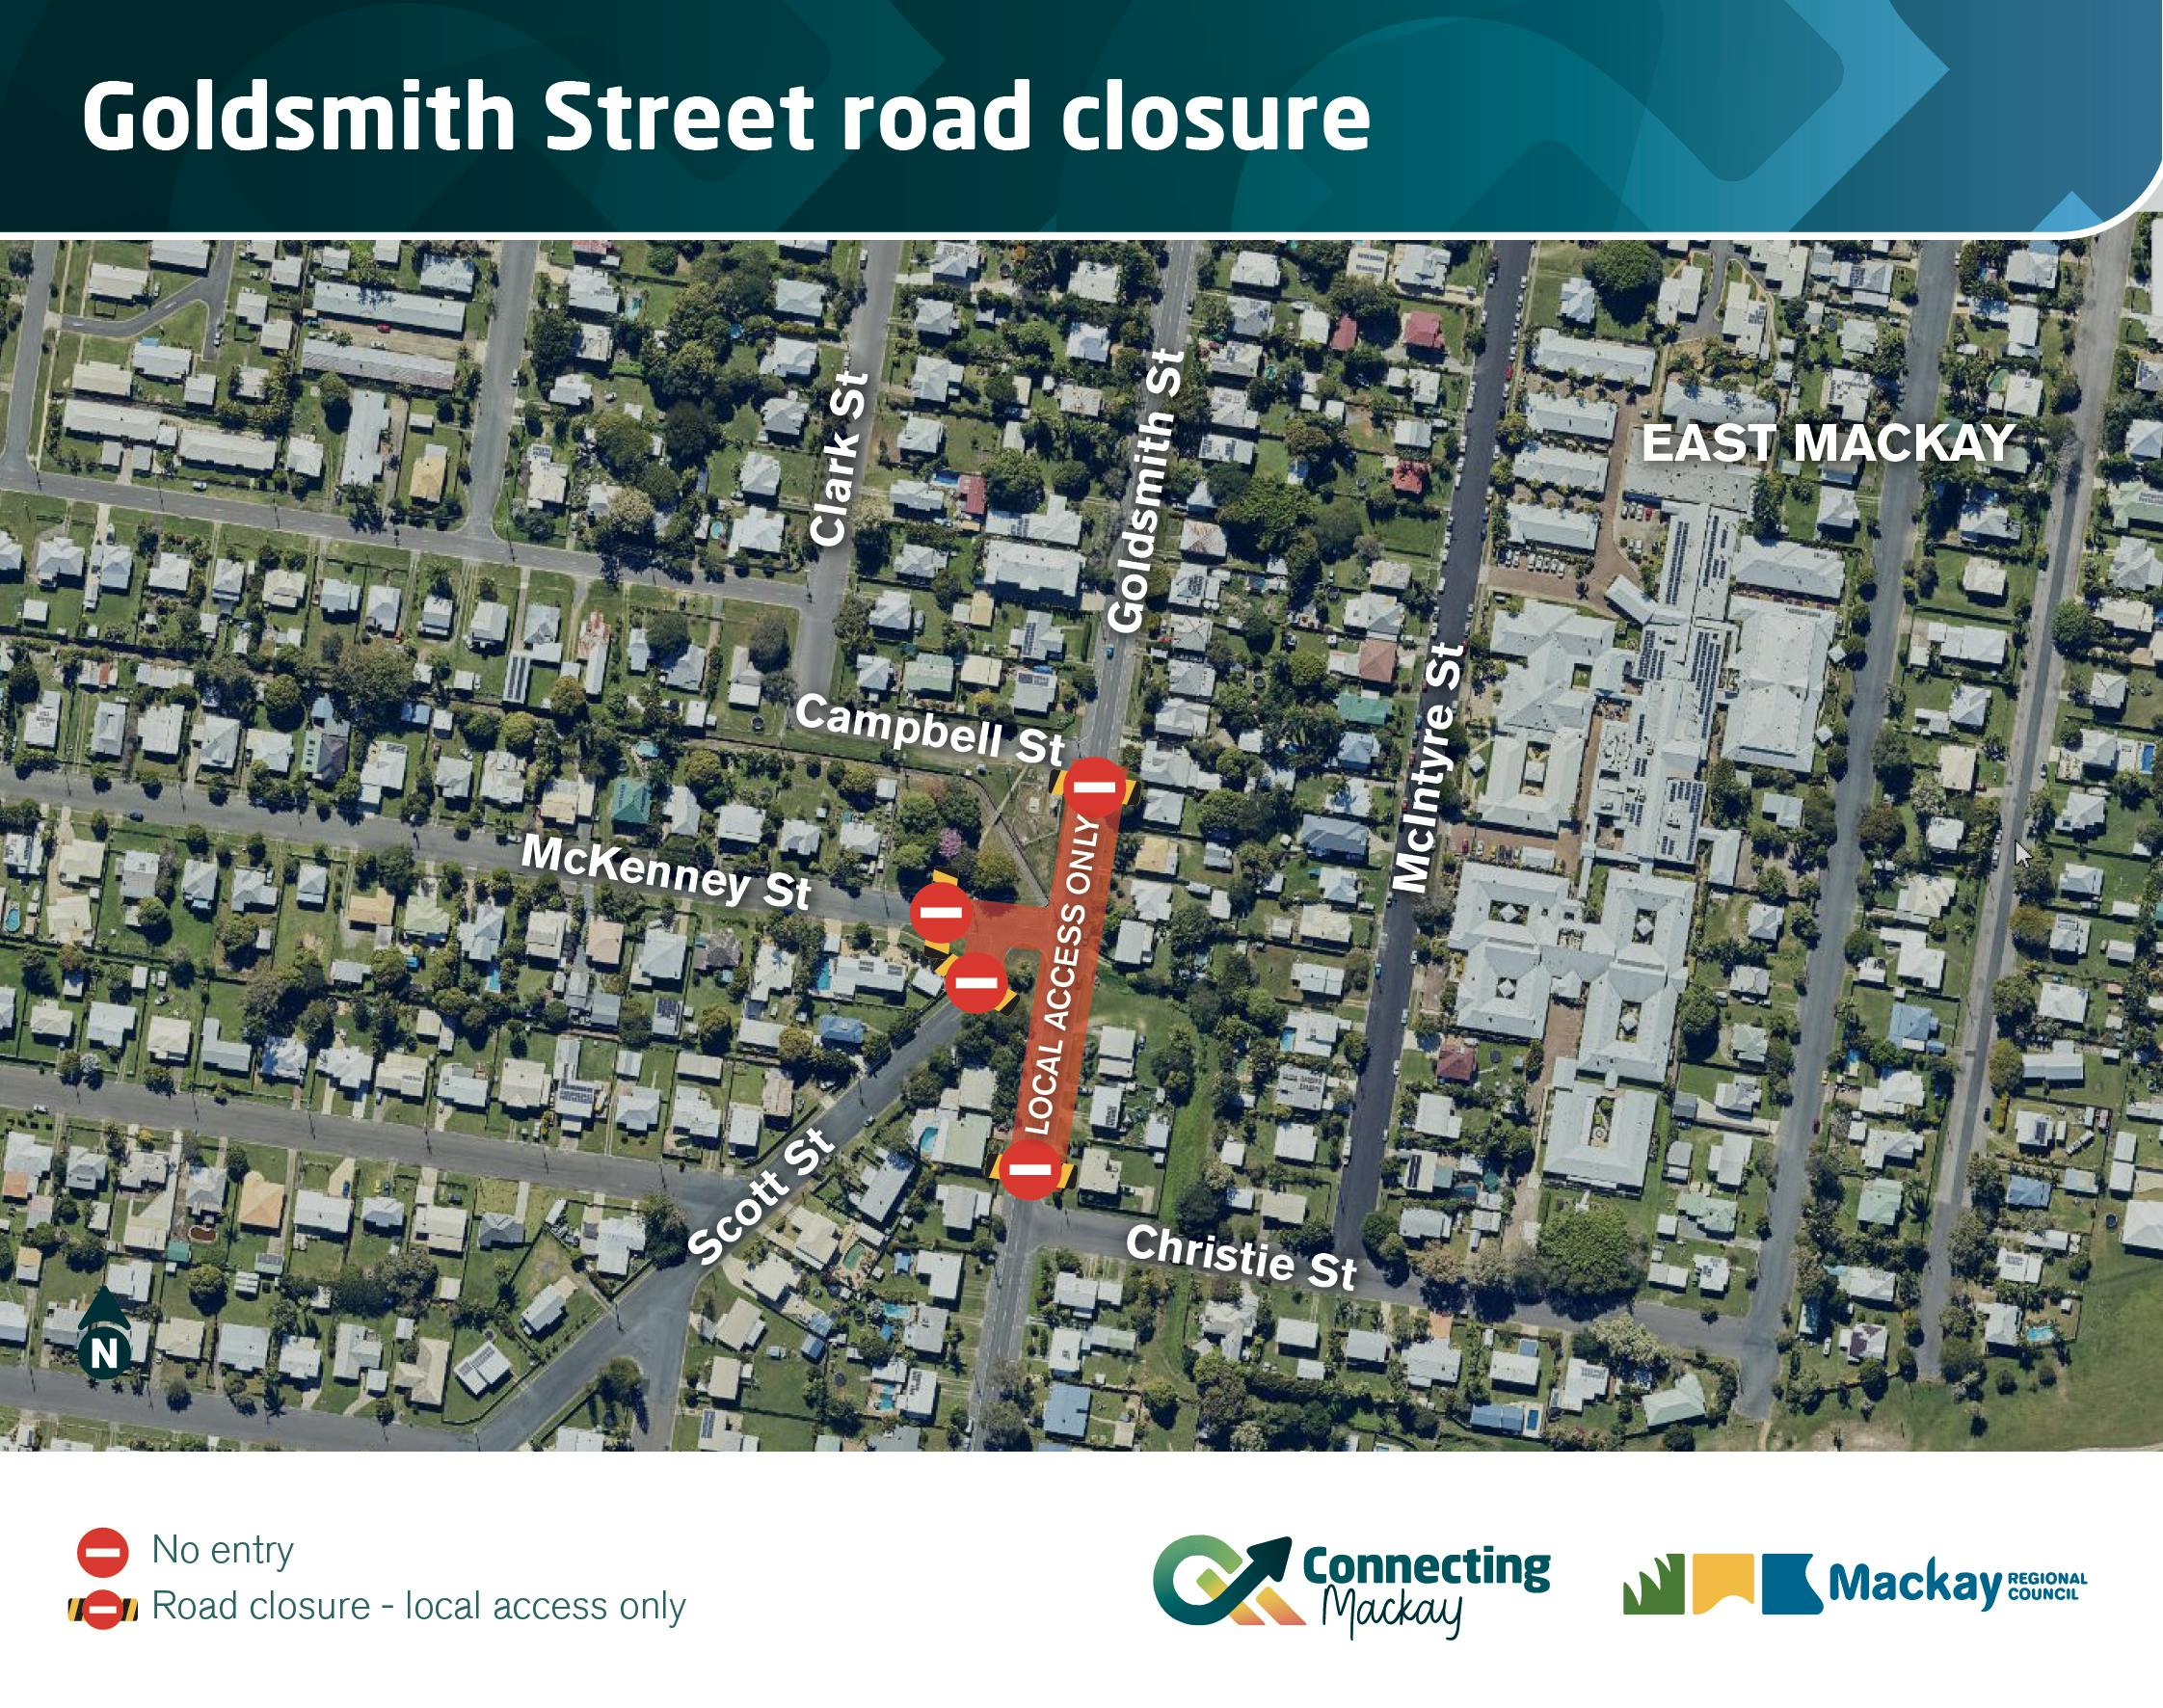 Goldsmith St road closure map.jpg